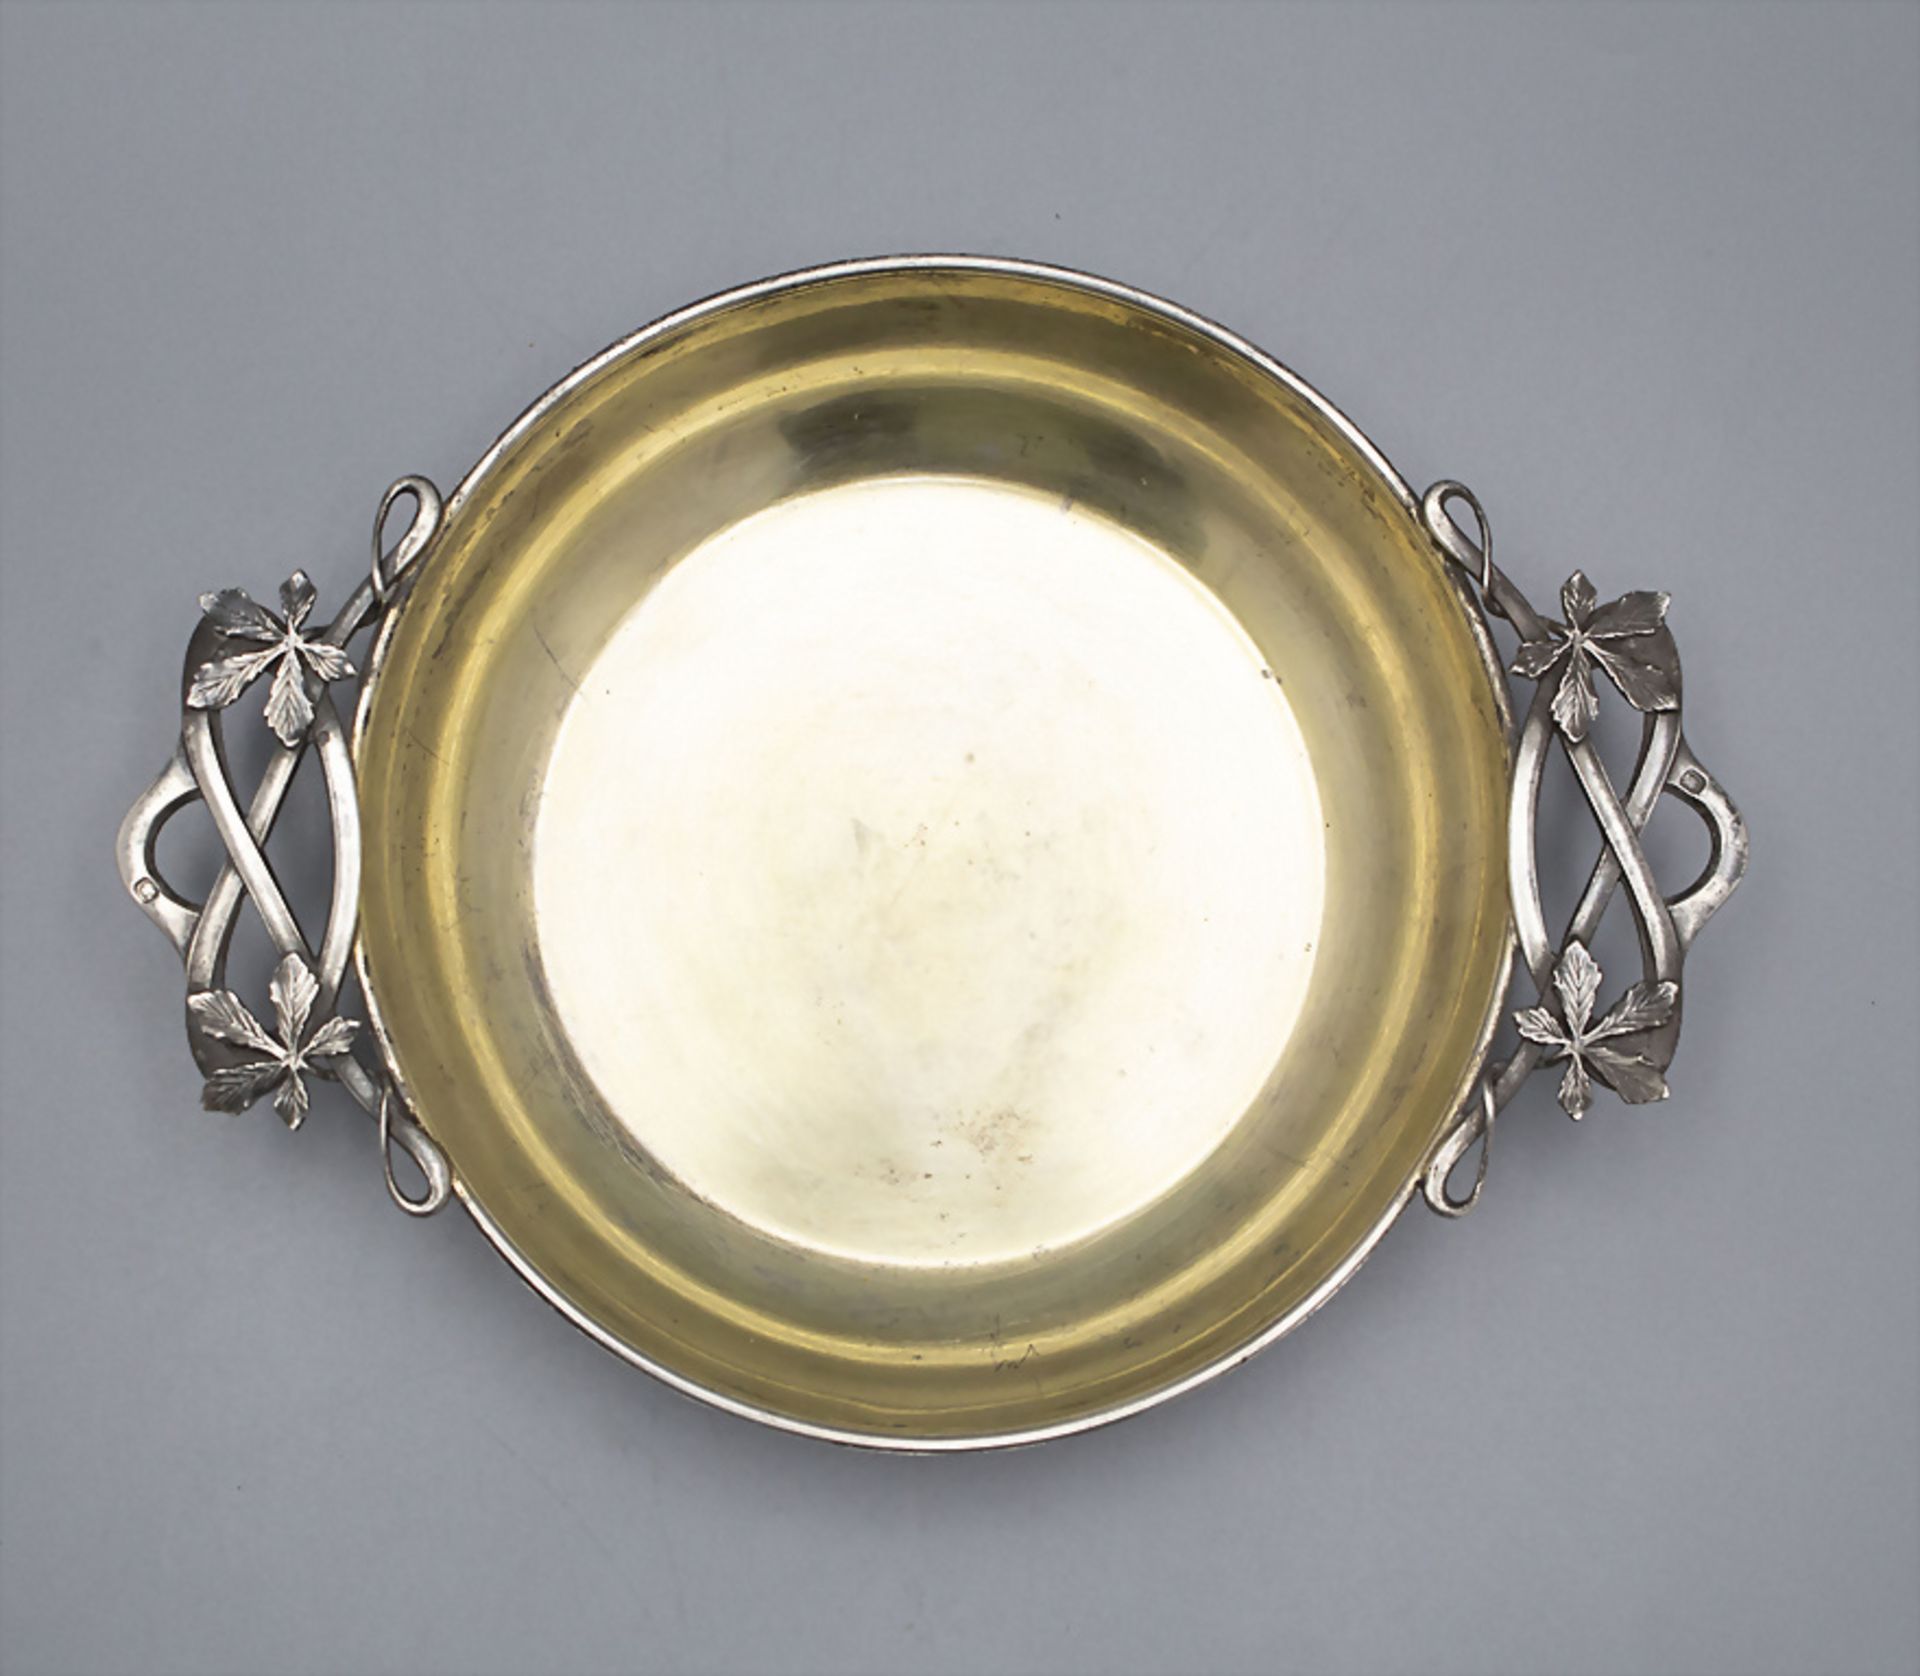 Jugendstil Silberschale mit Handhaben / An Art Nouveau silver bowl with handles, Alphonse ...